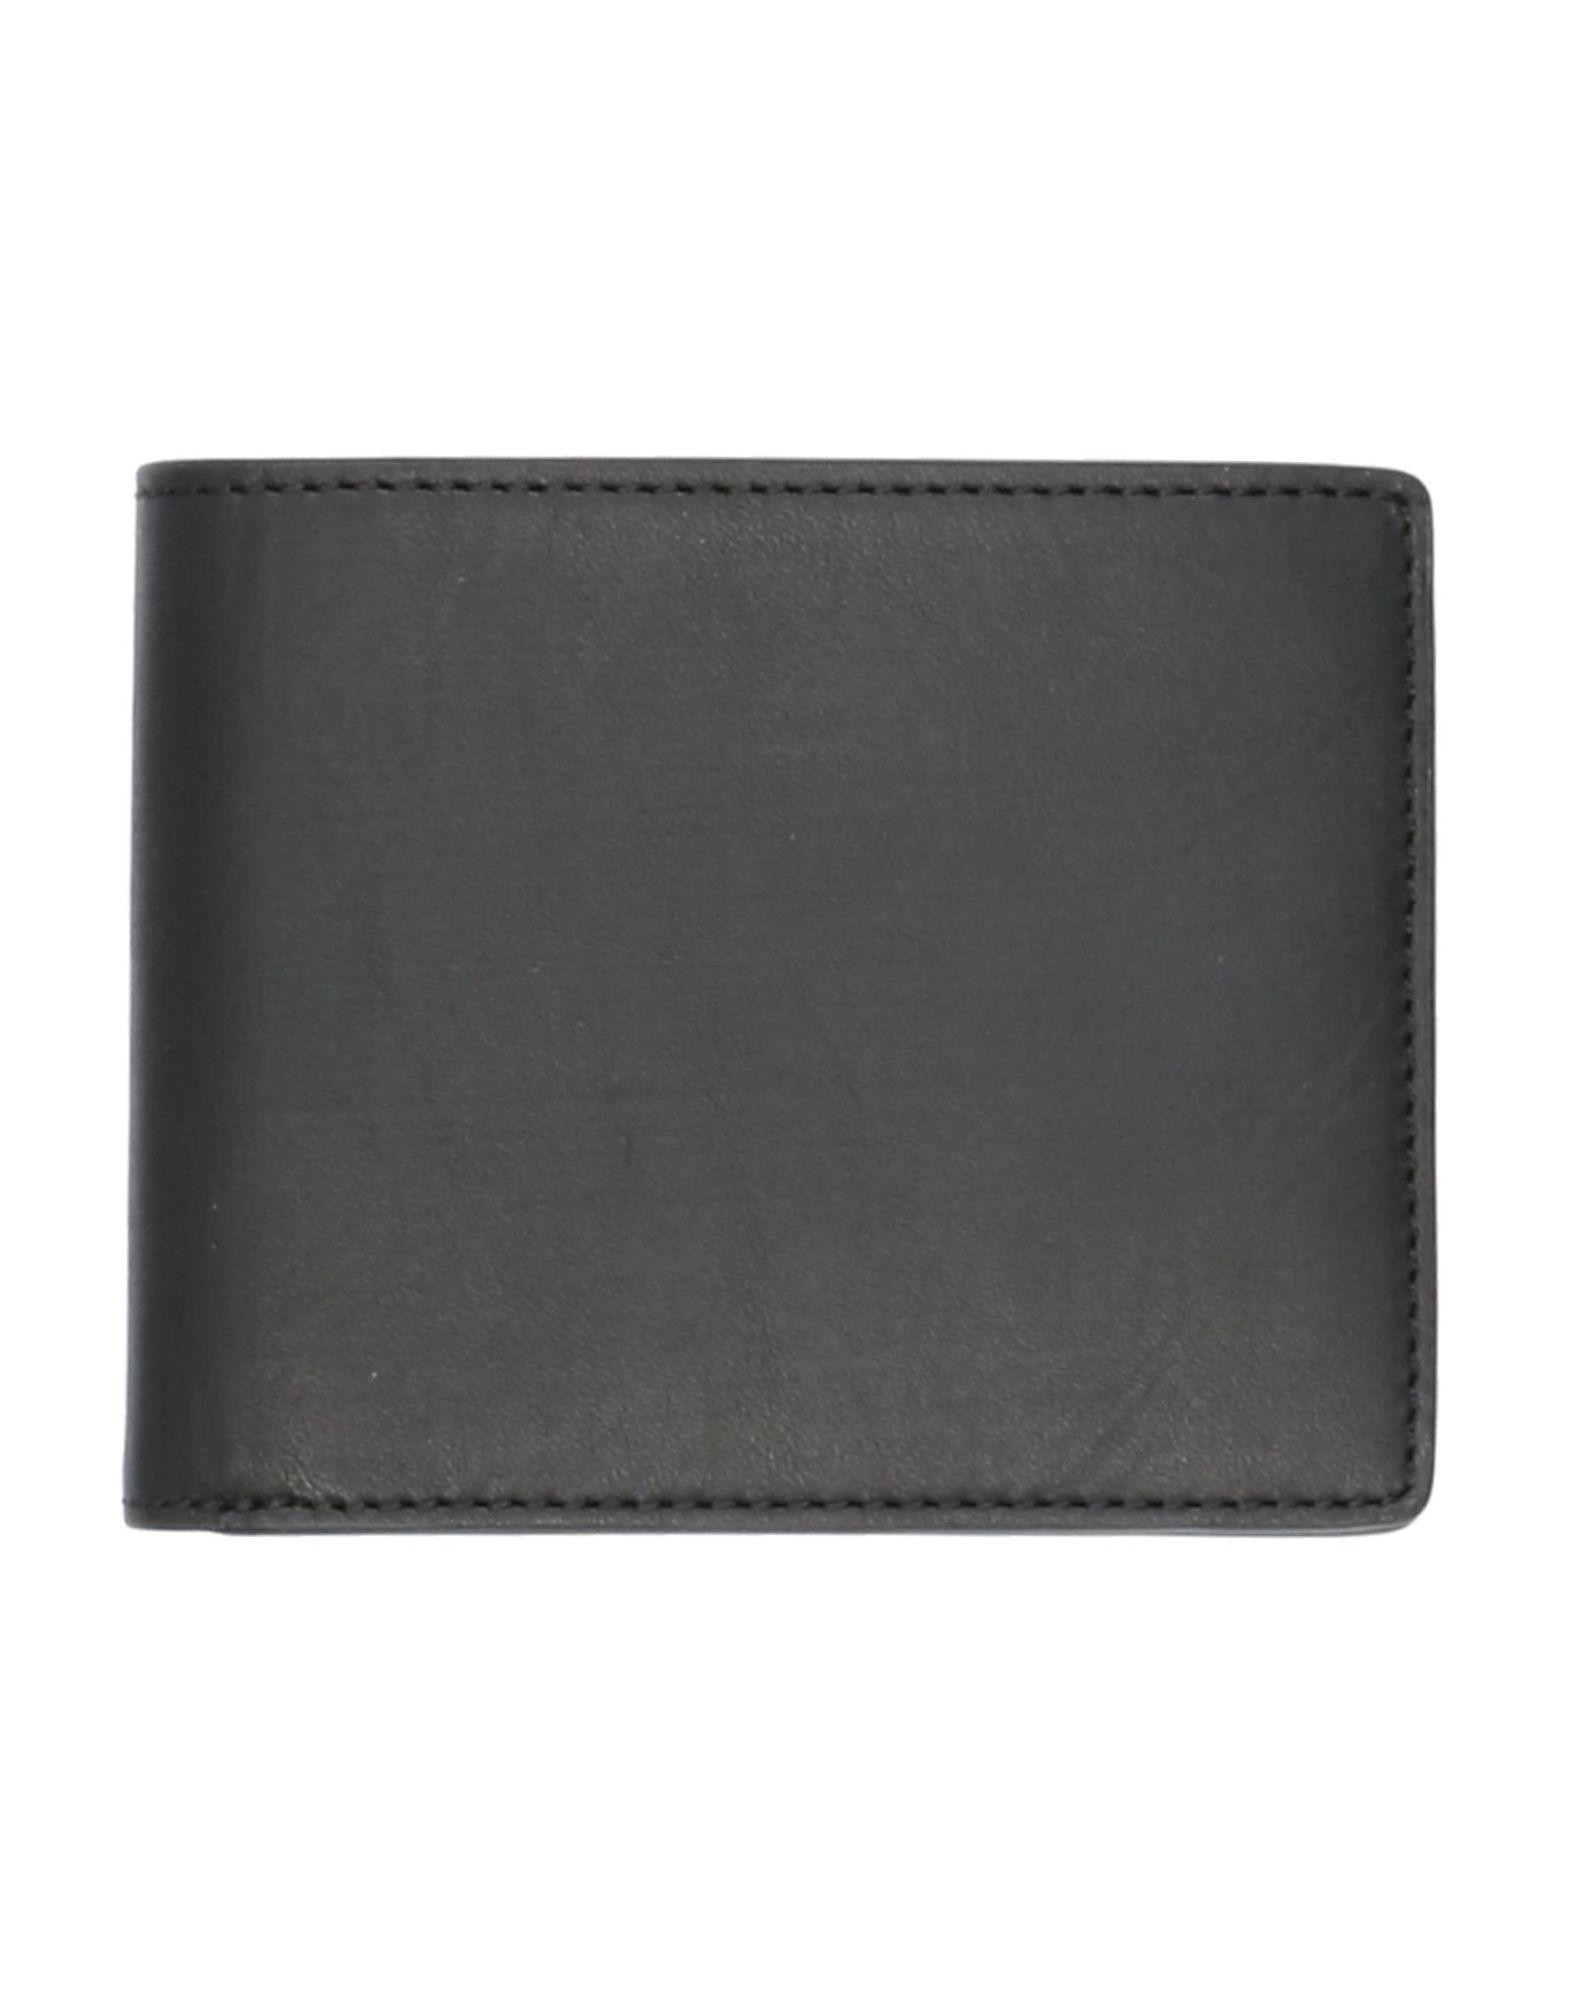 Rag & Bone Leather Wallet in Black for Men - Lyst